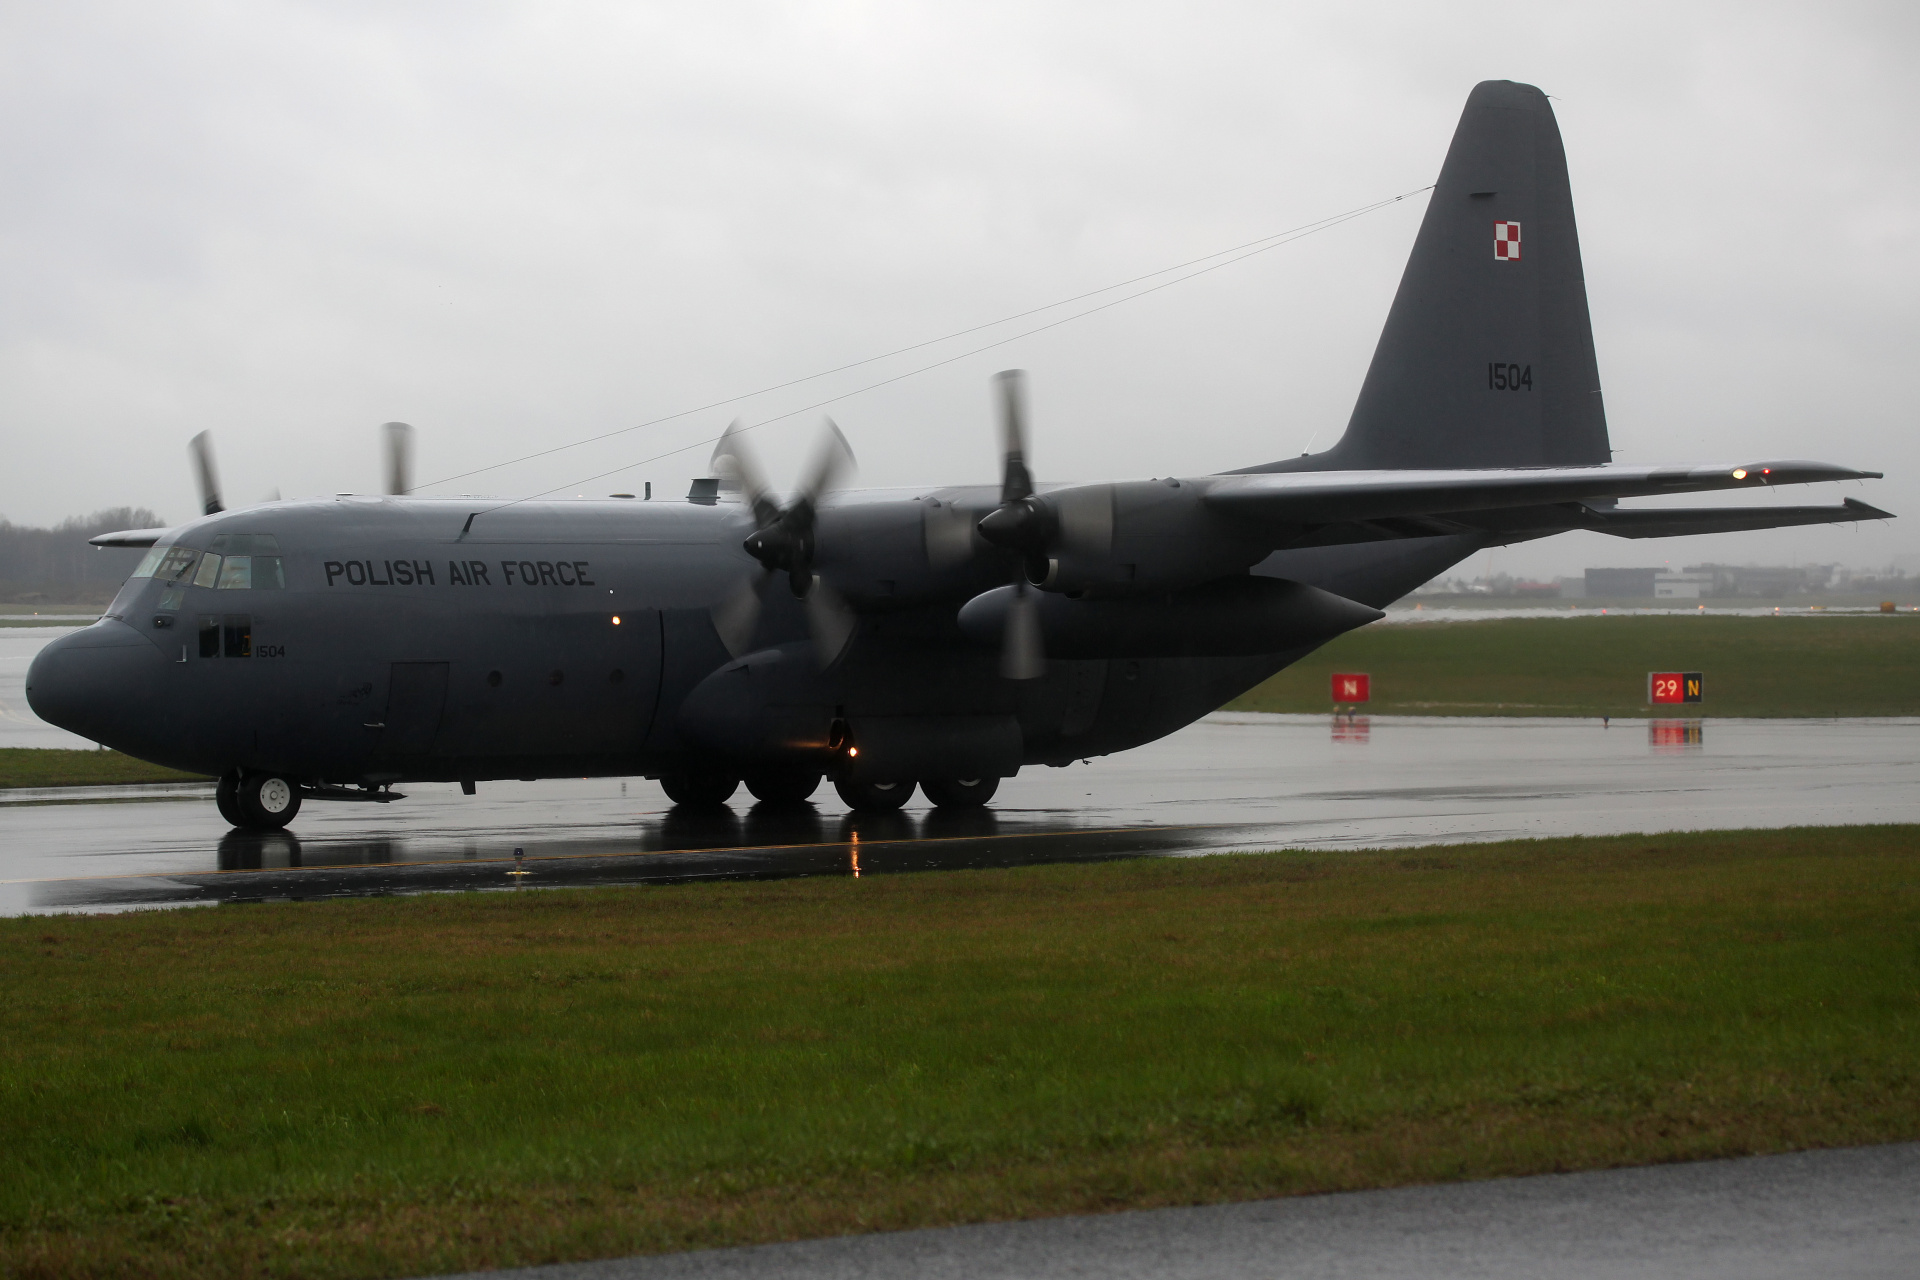 C-130E, 1504 (Aircraft » EPWA Spotting » Lockheed C-130 Hercules » Polish Air Force)